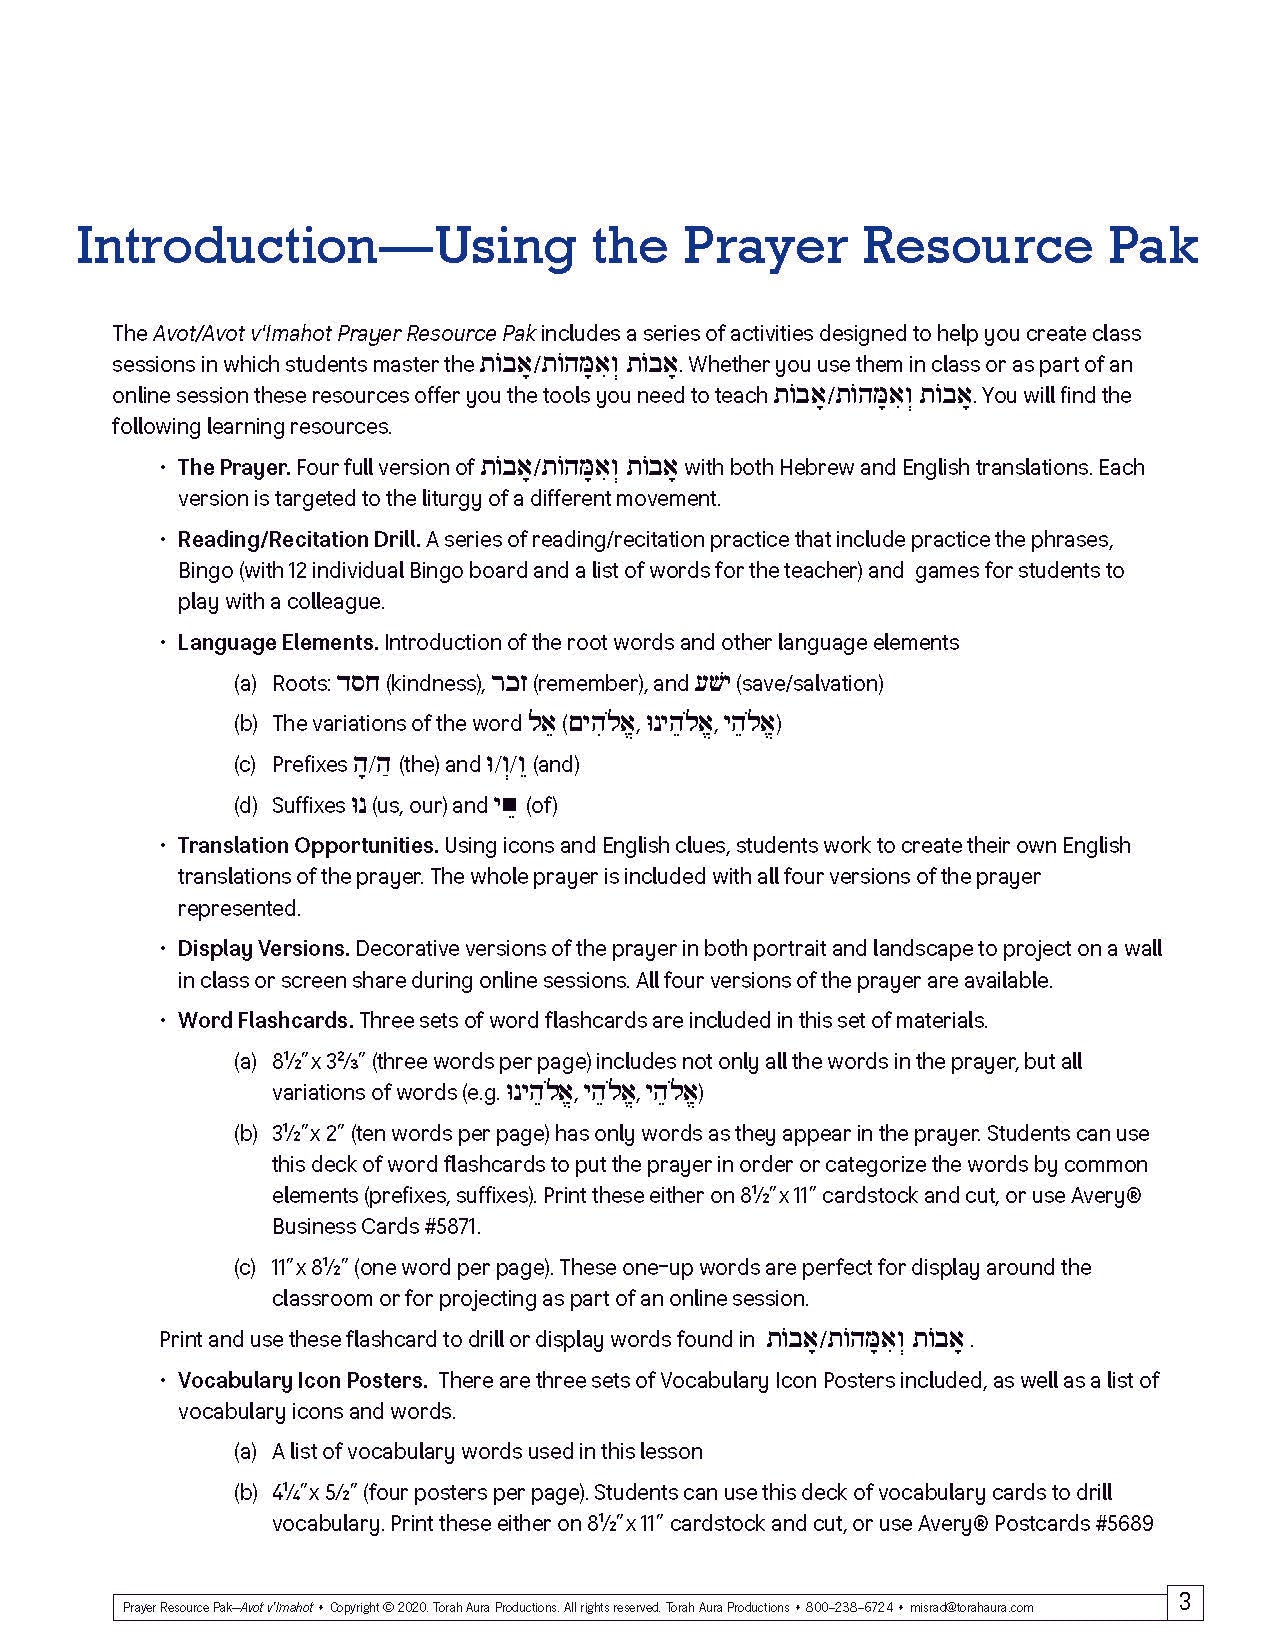 Prayer Resource Pack: Avot V'imahot